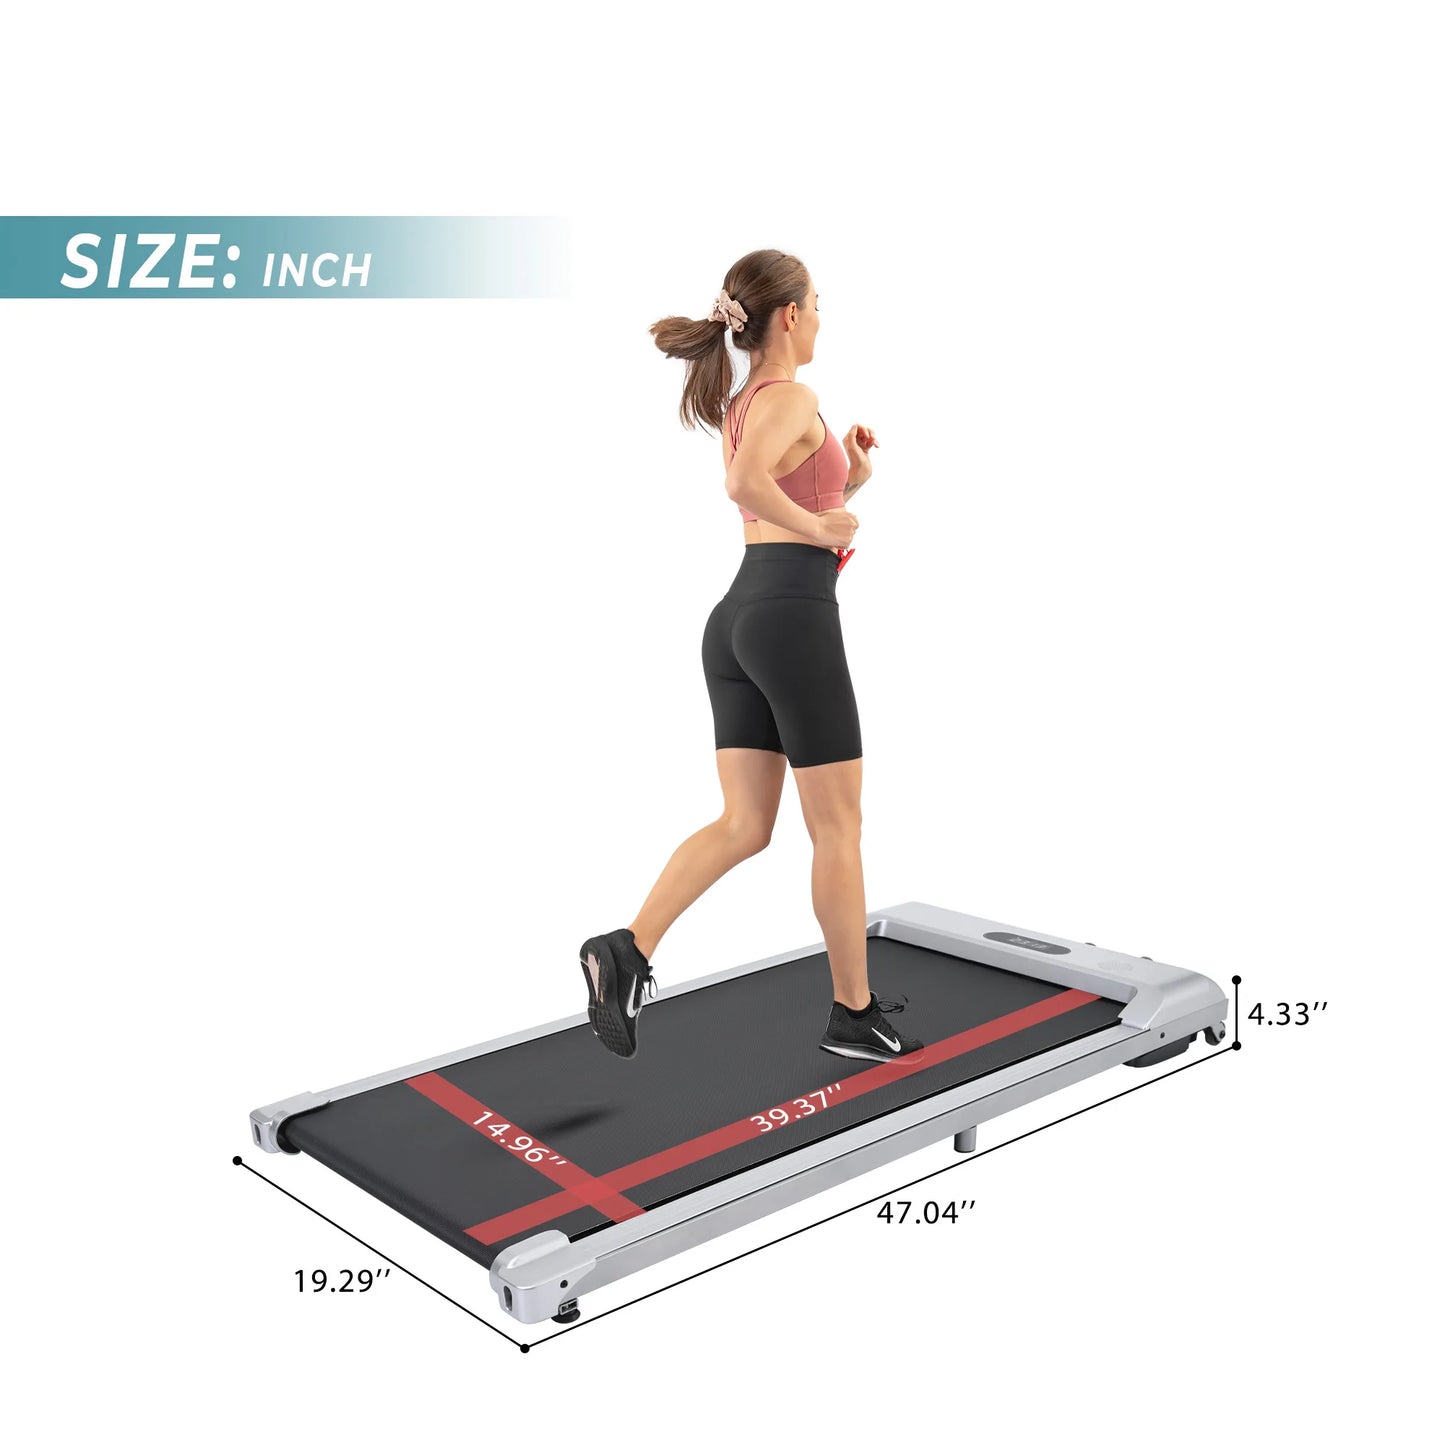 Bluetooth APP and speaker, Remote Control, Display, Walking Jogging Running Treadmill.